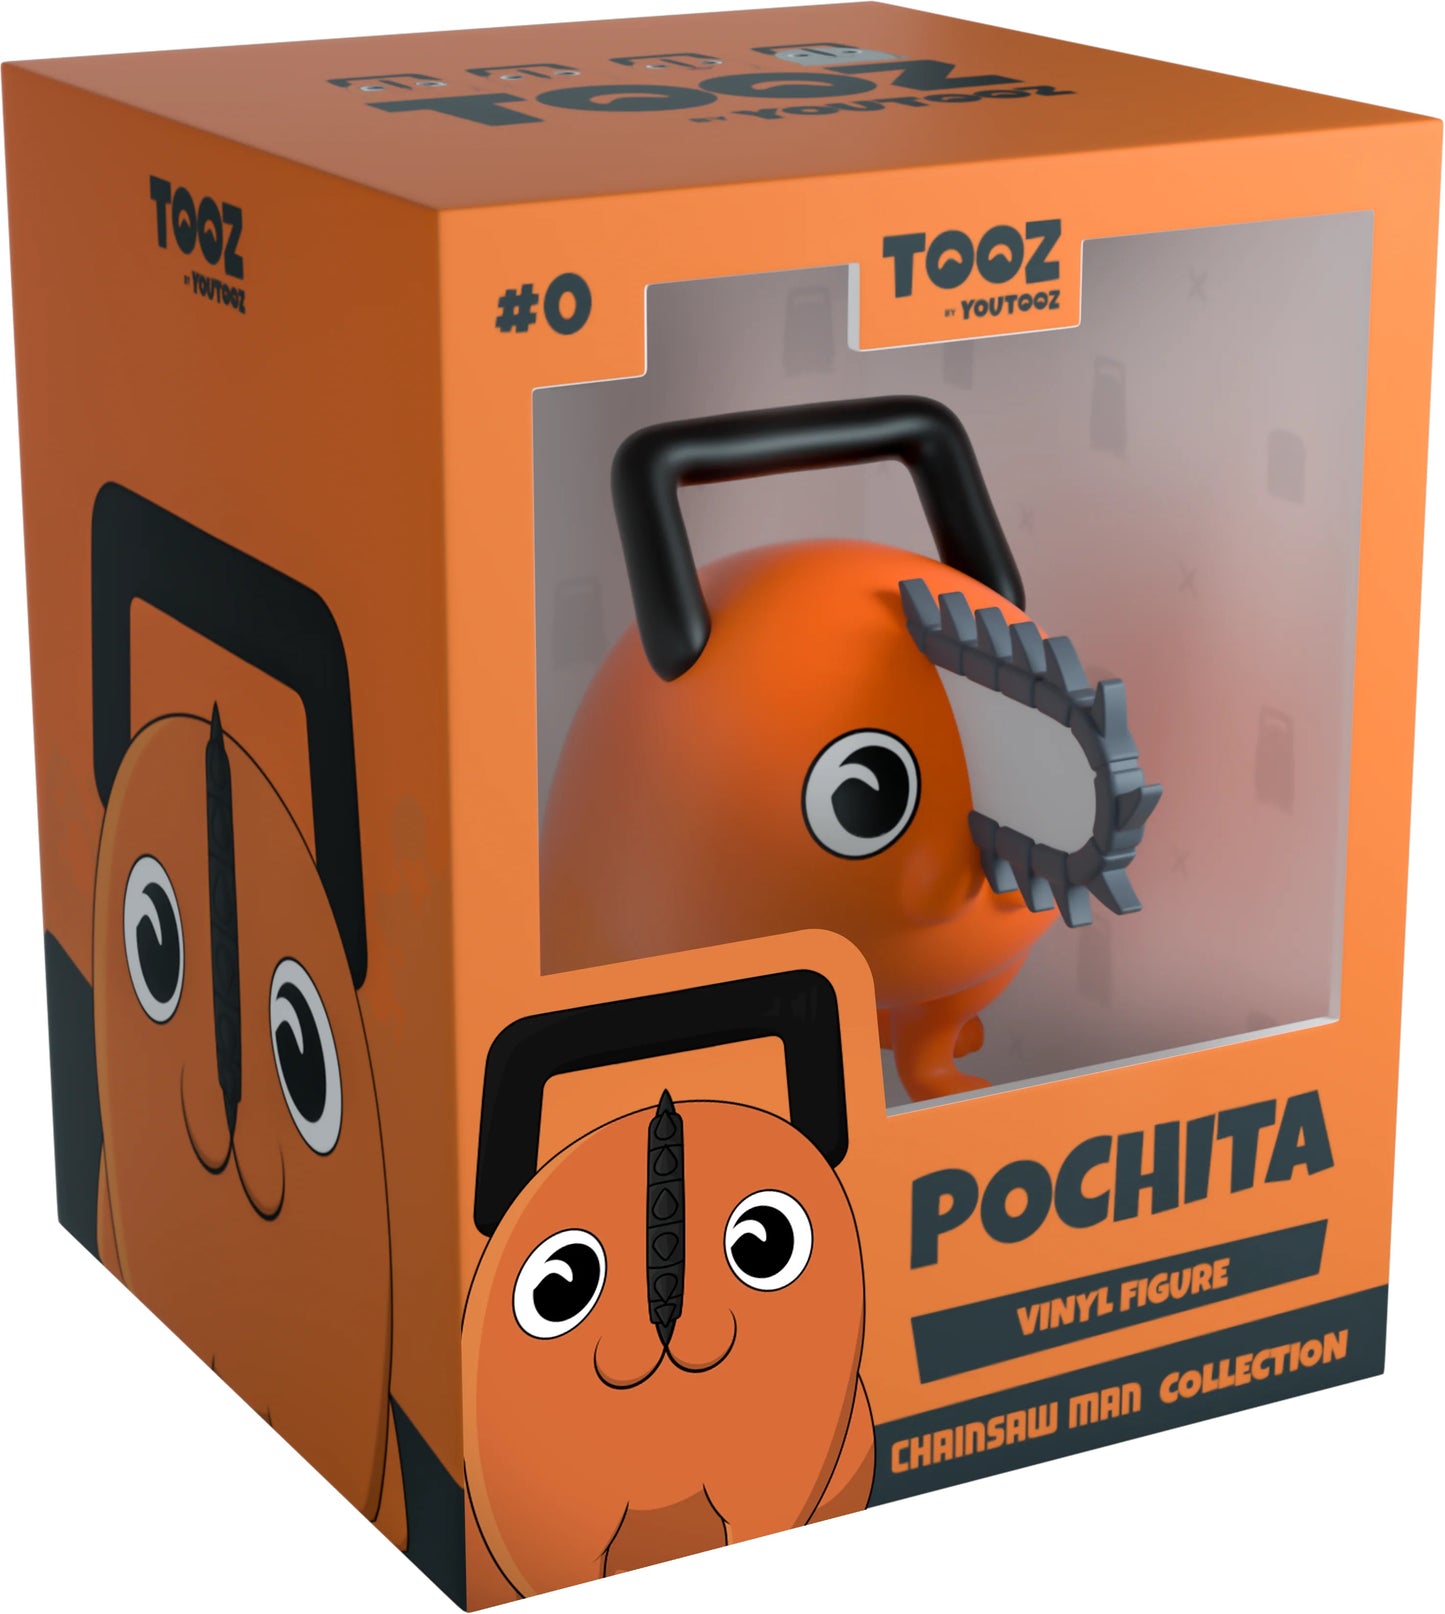 Youtooz Chainsaw Man Pochita Happy Vinyl Figure